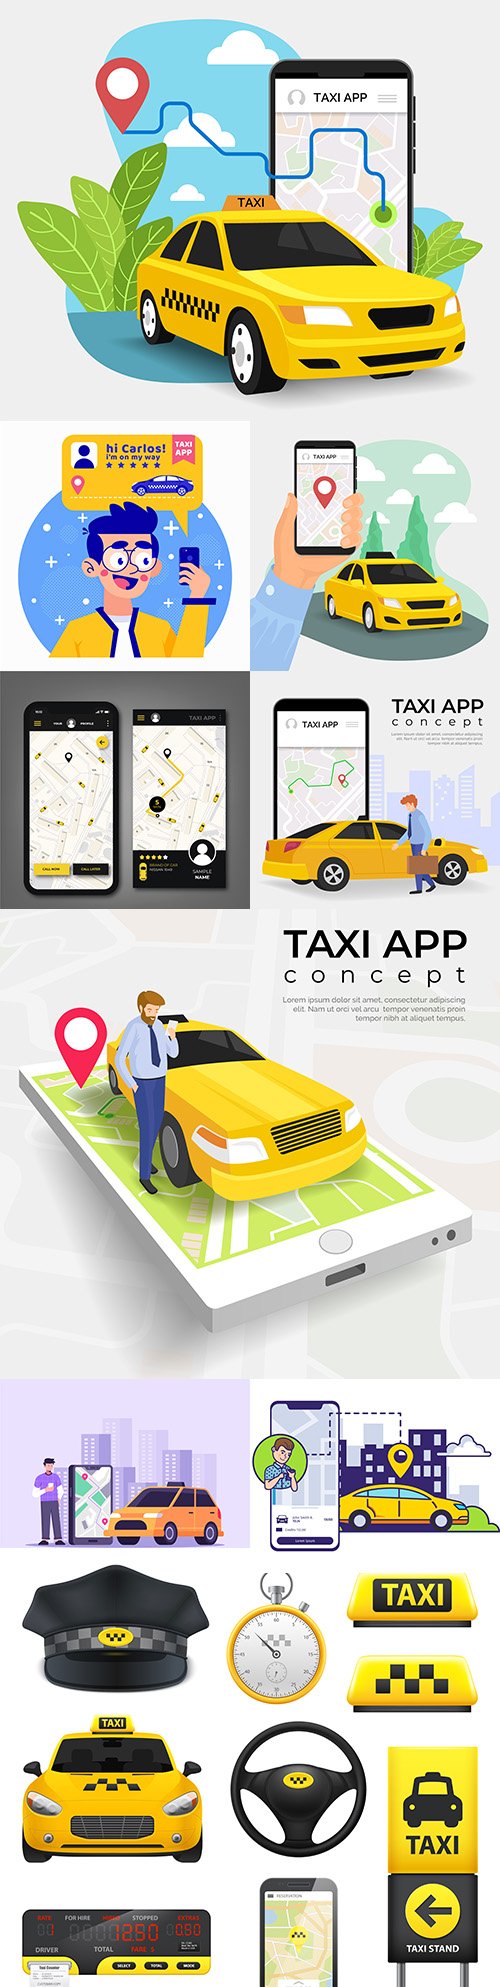 Taxi concept application service illustration design